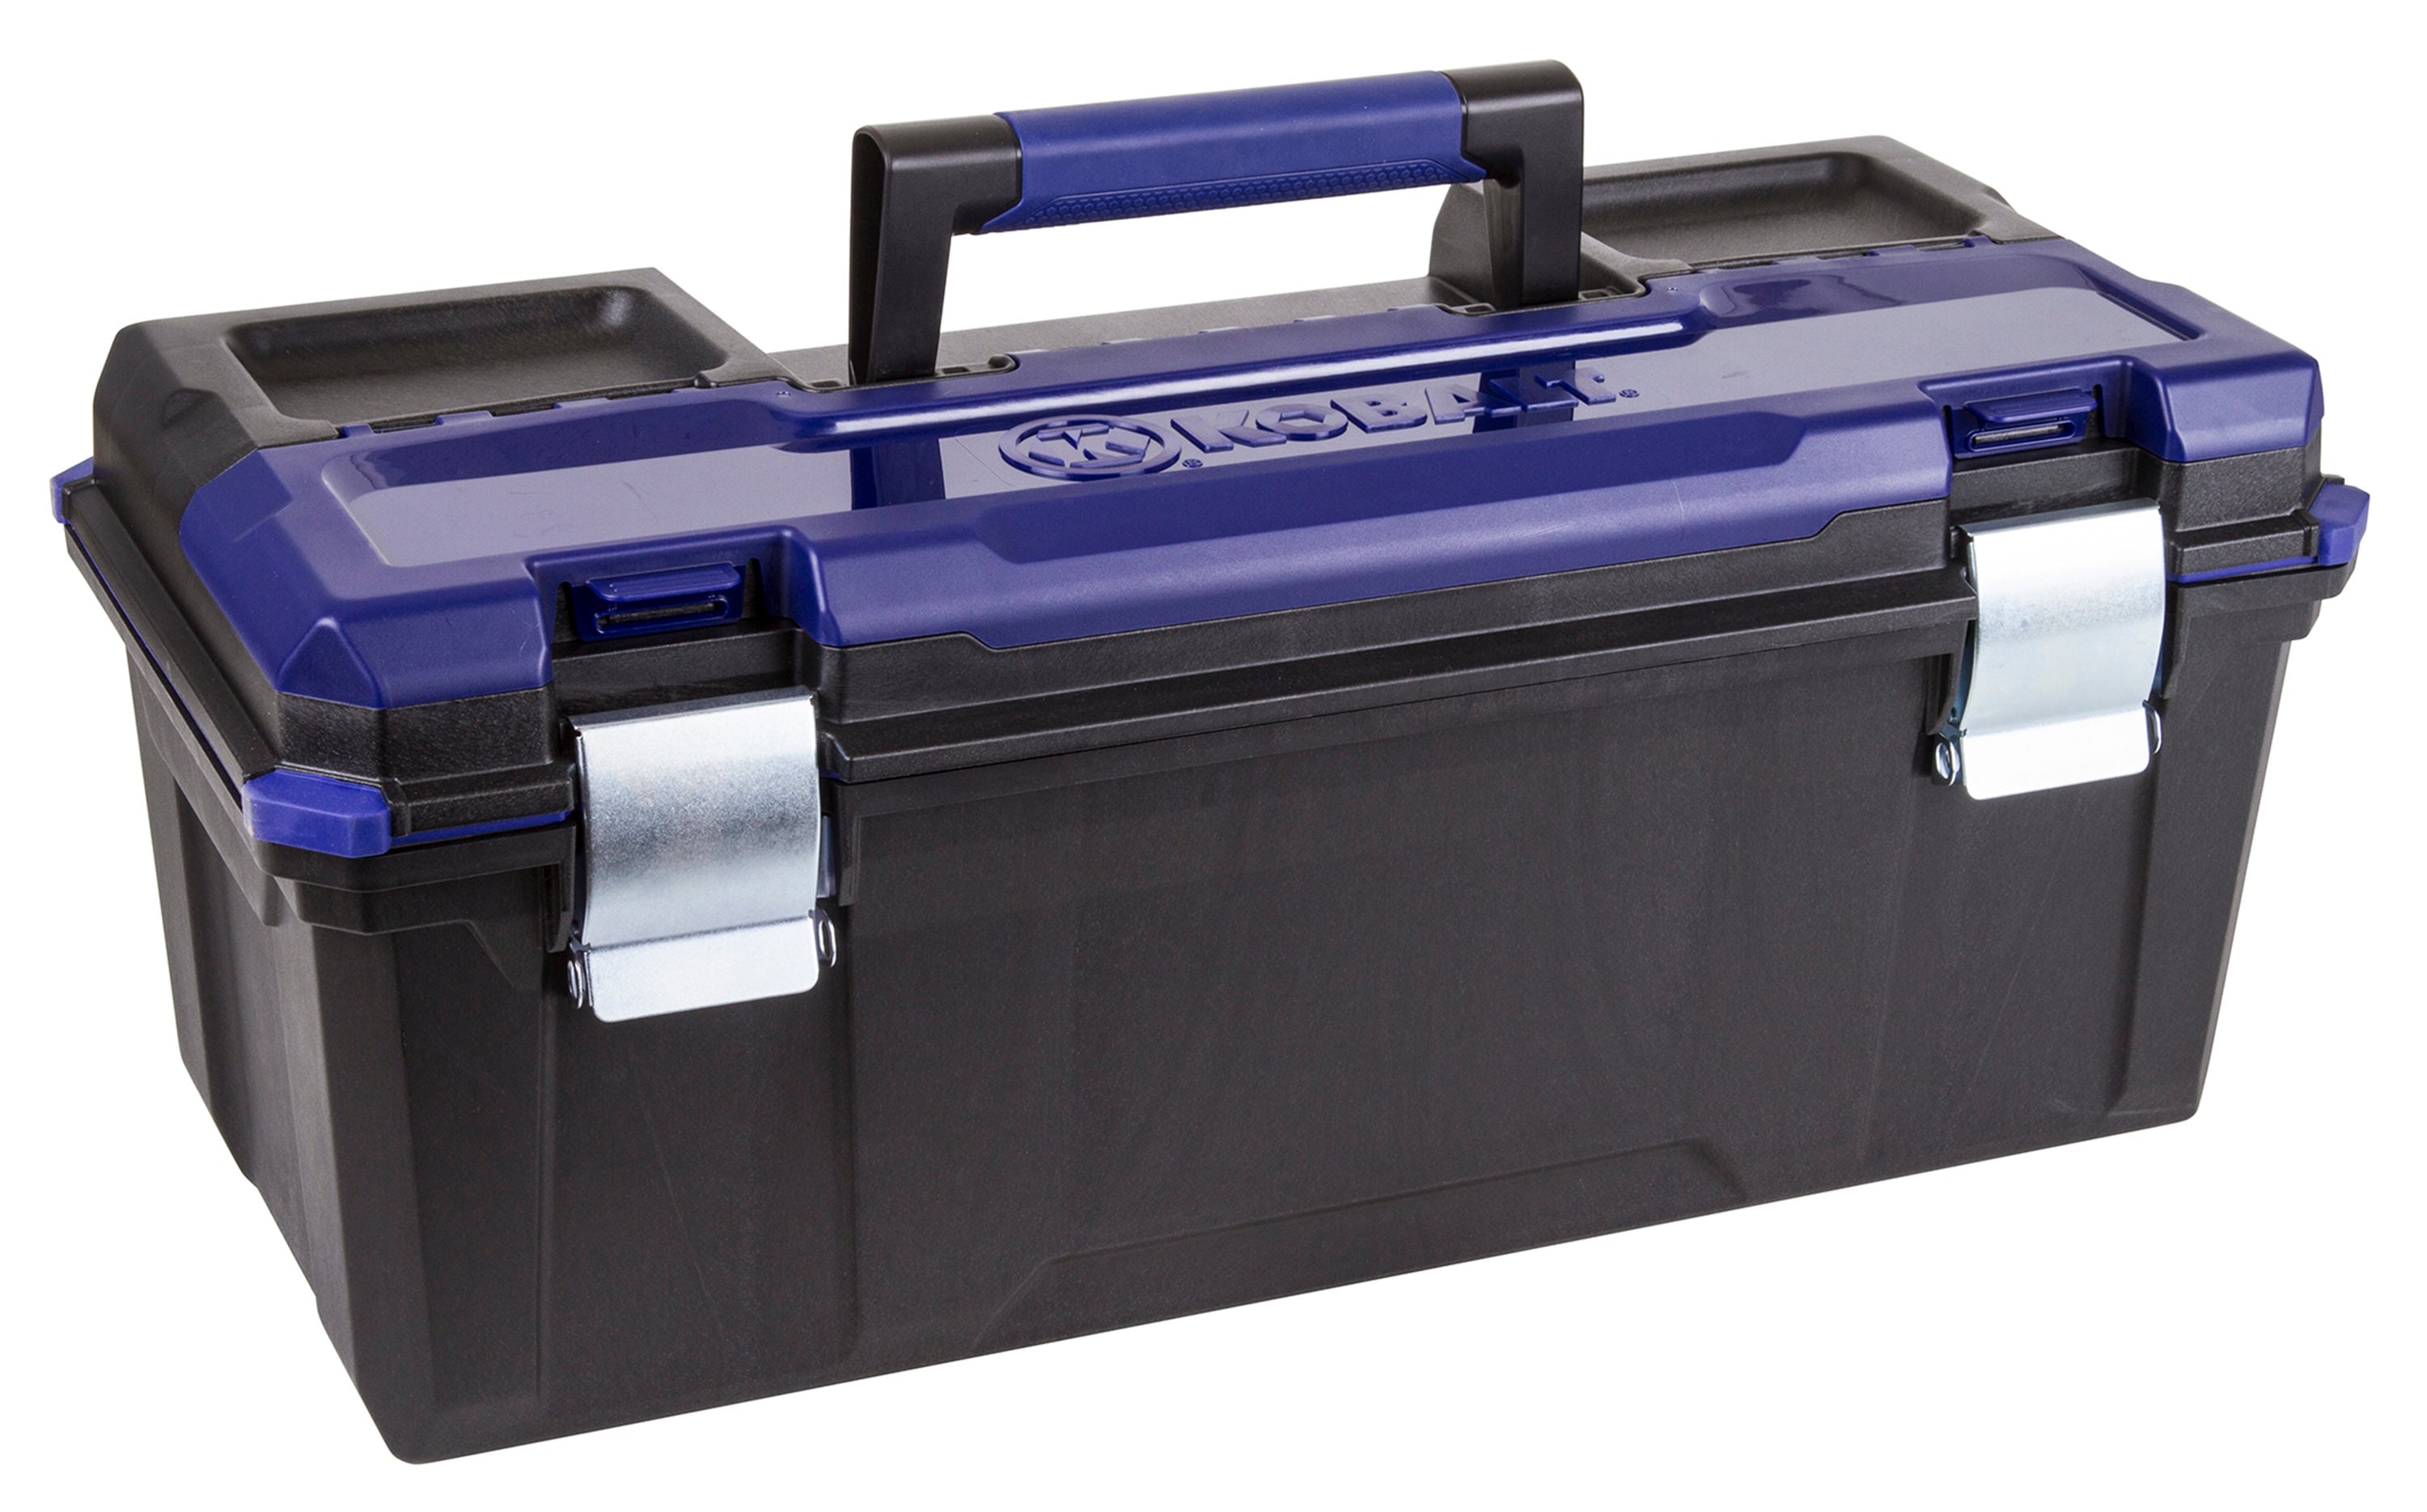 Kobalt Zerust 26 In Black Plastic Lockable Tool Box In The Portable